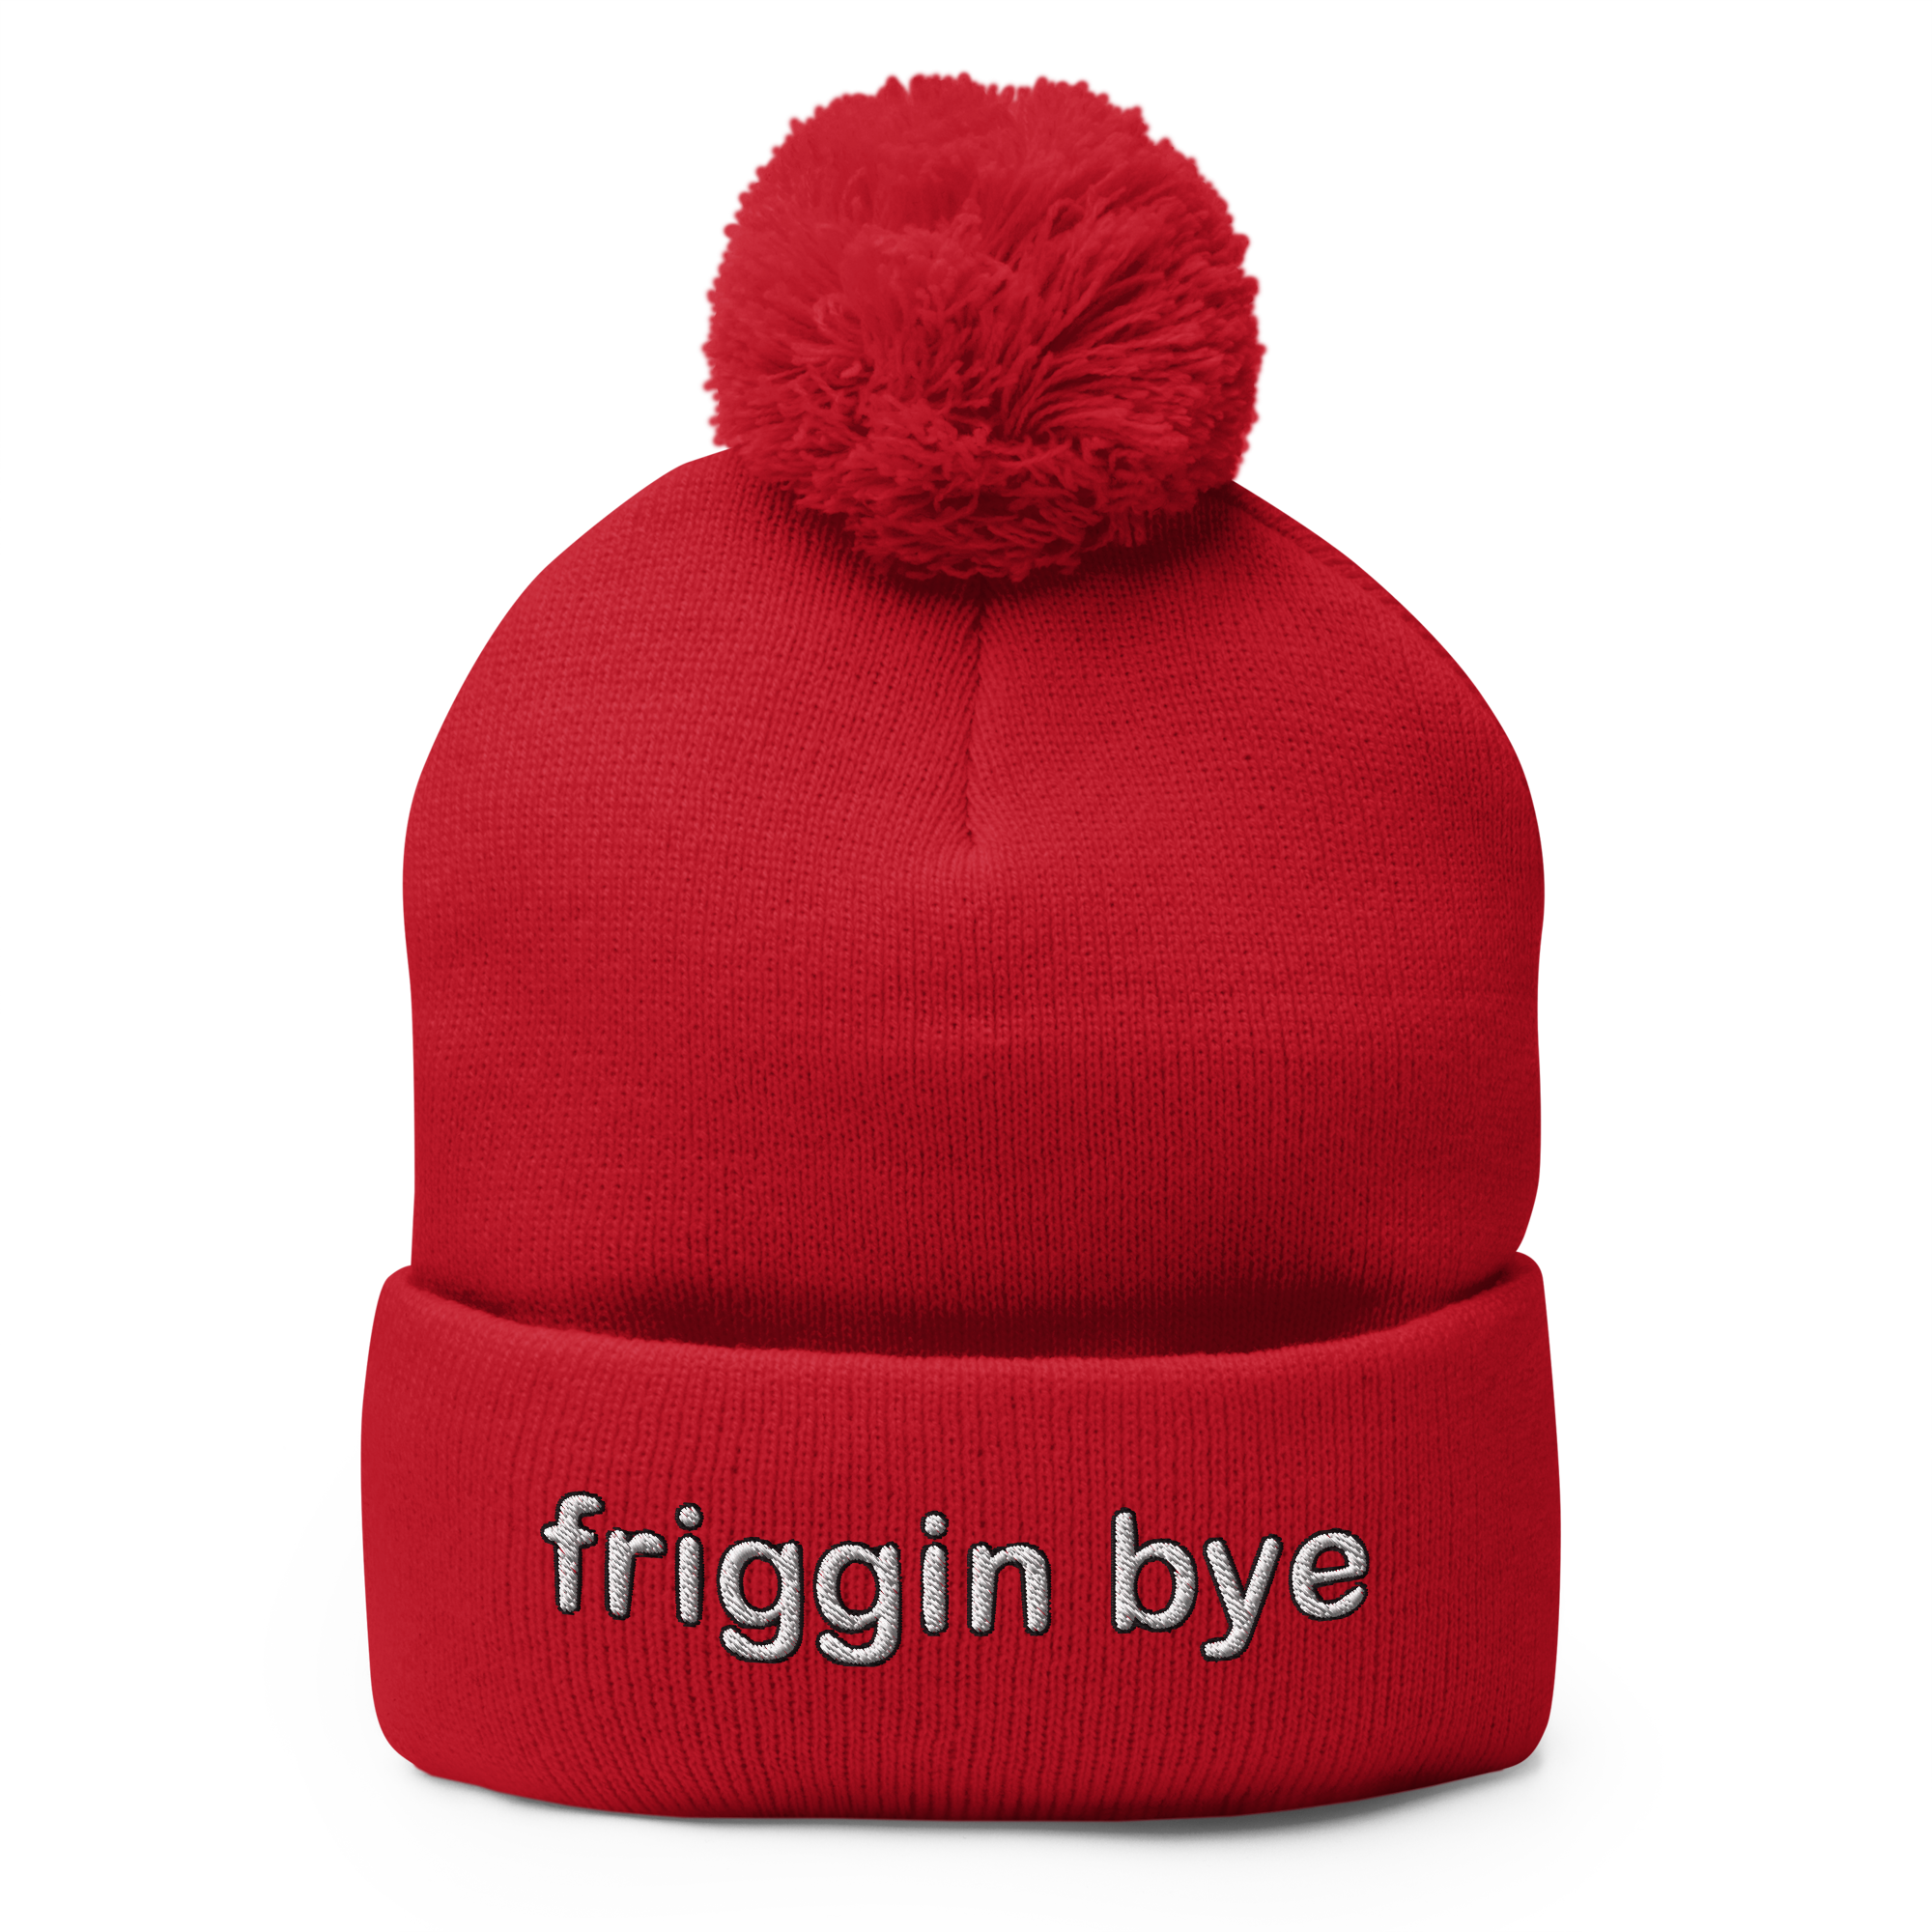 Friggin Bye Embroidered Adult Beanie Pom-Pom Hat Red